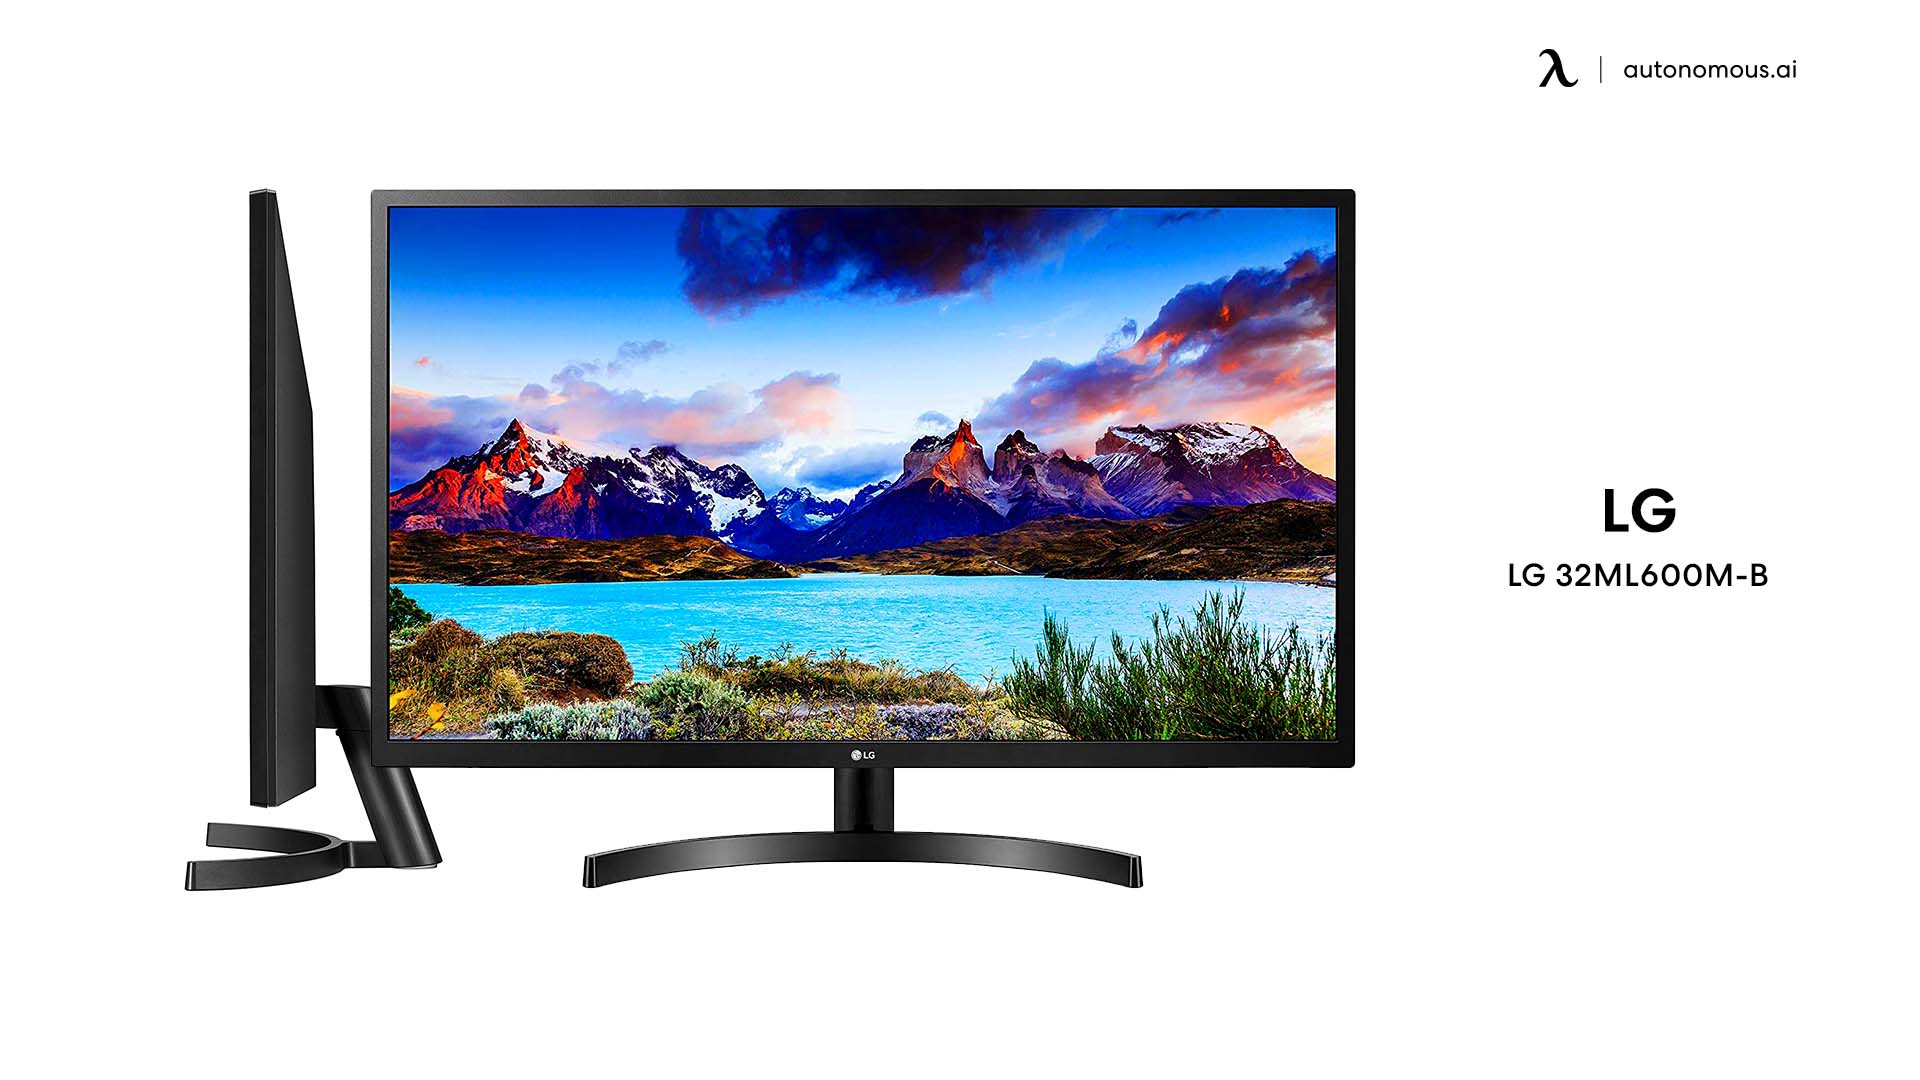 LG 32ML600M-B 32-inch gaming monitor